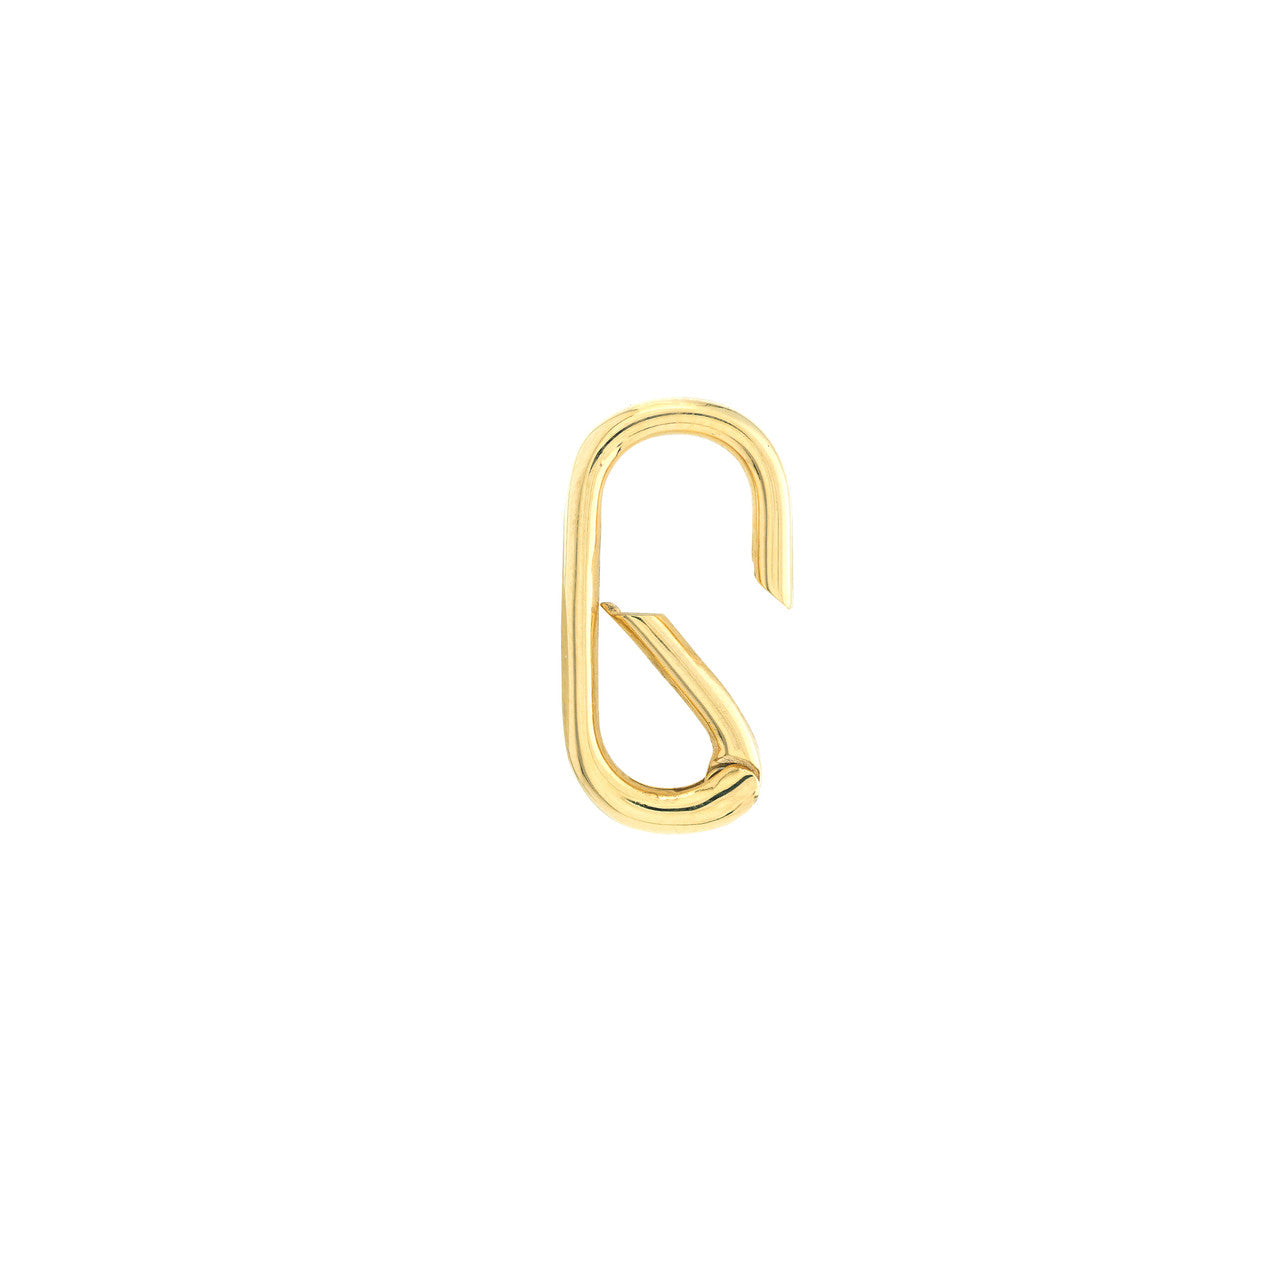 14K Yellow Gold Paper Clip Shaped Push Clasp Lock Connector Enhancer Hanger for Pendants Charms Bracelets Anklets Necklaces Chains